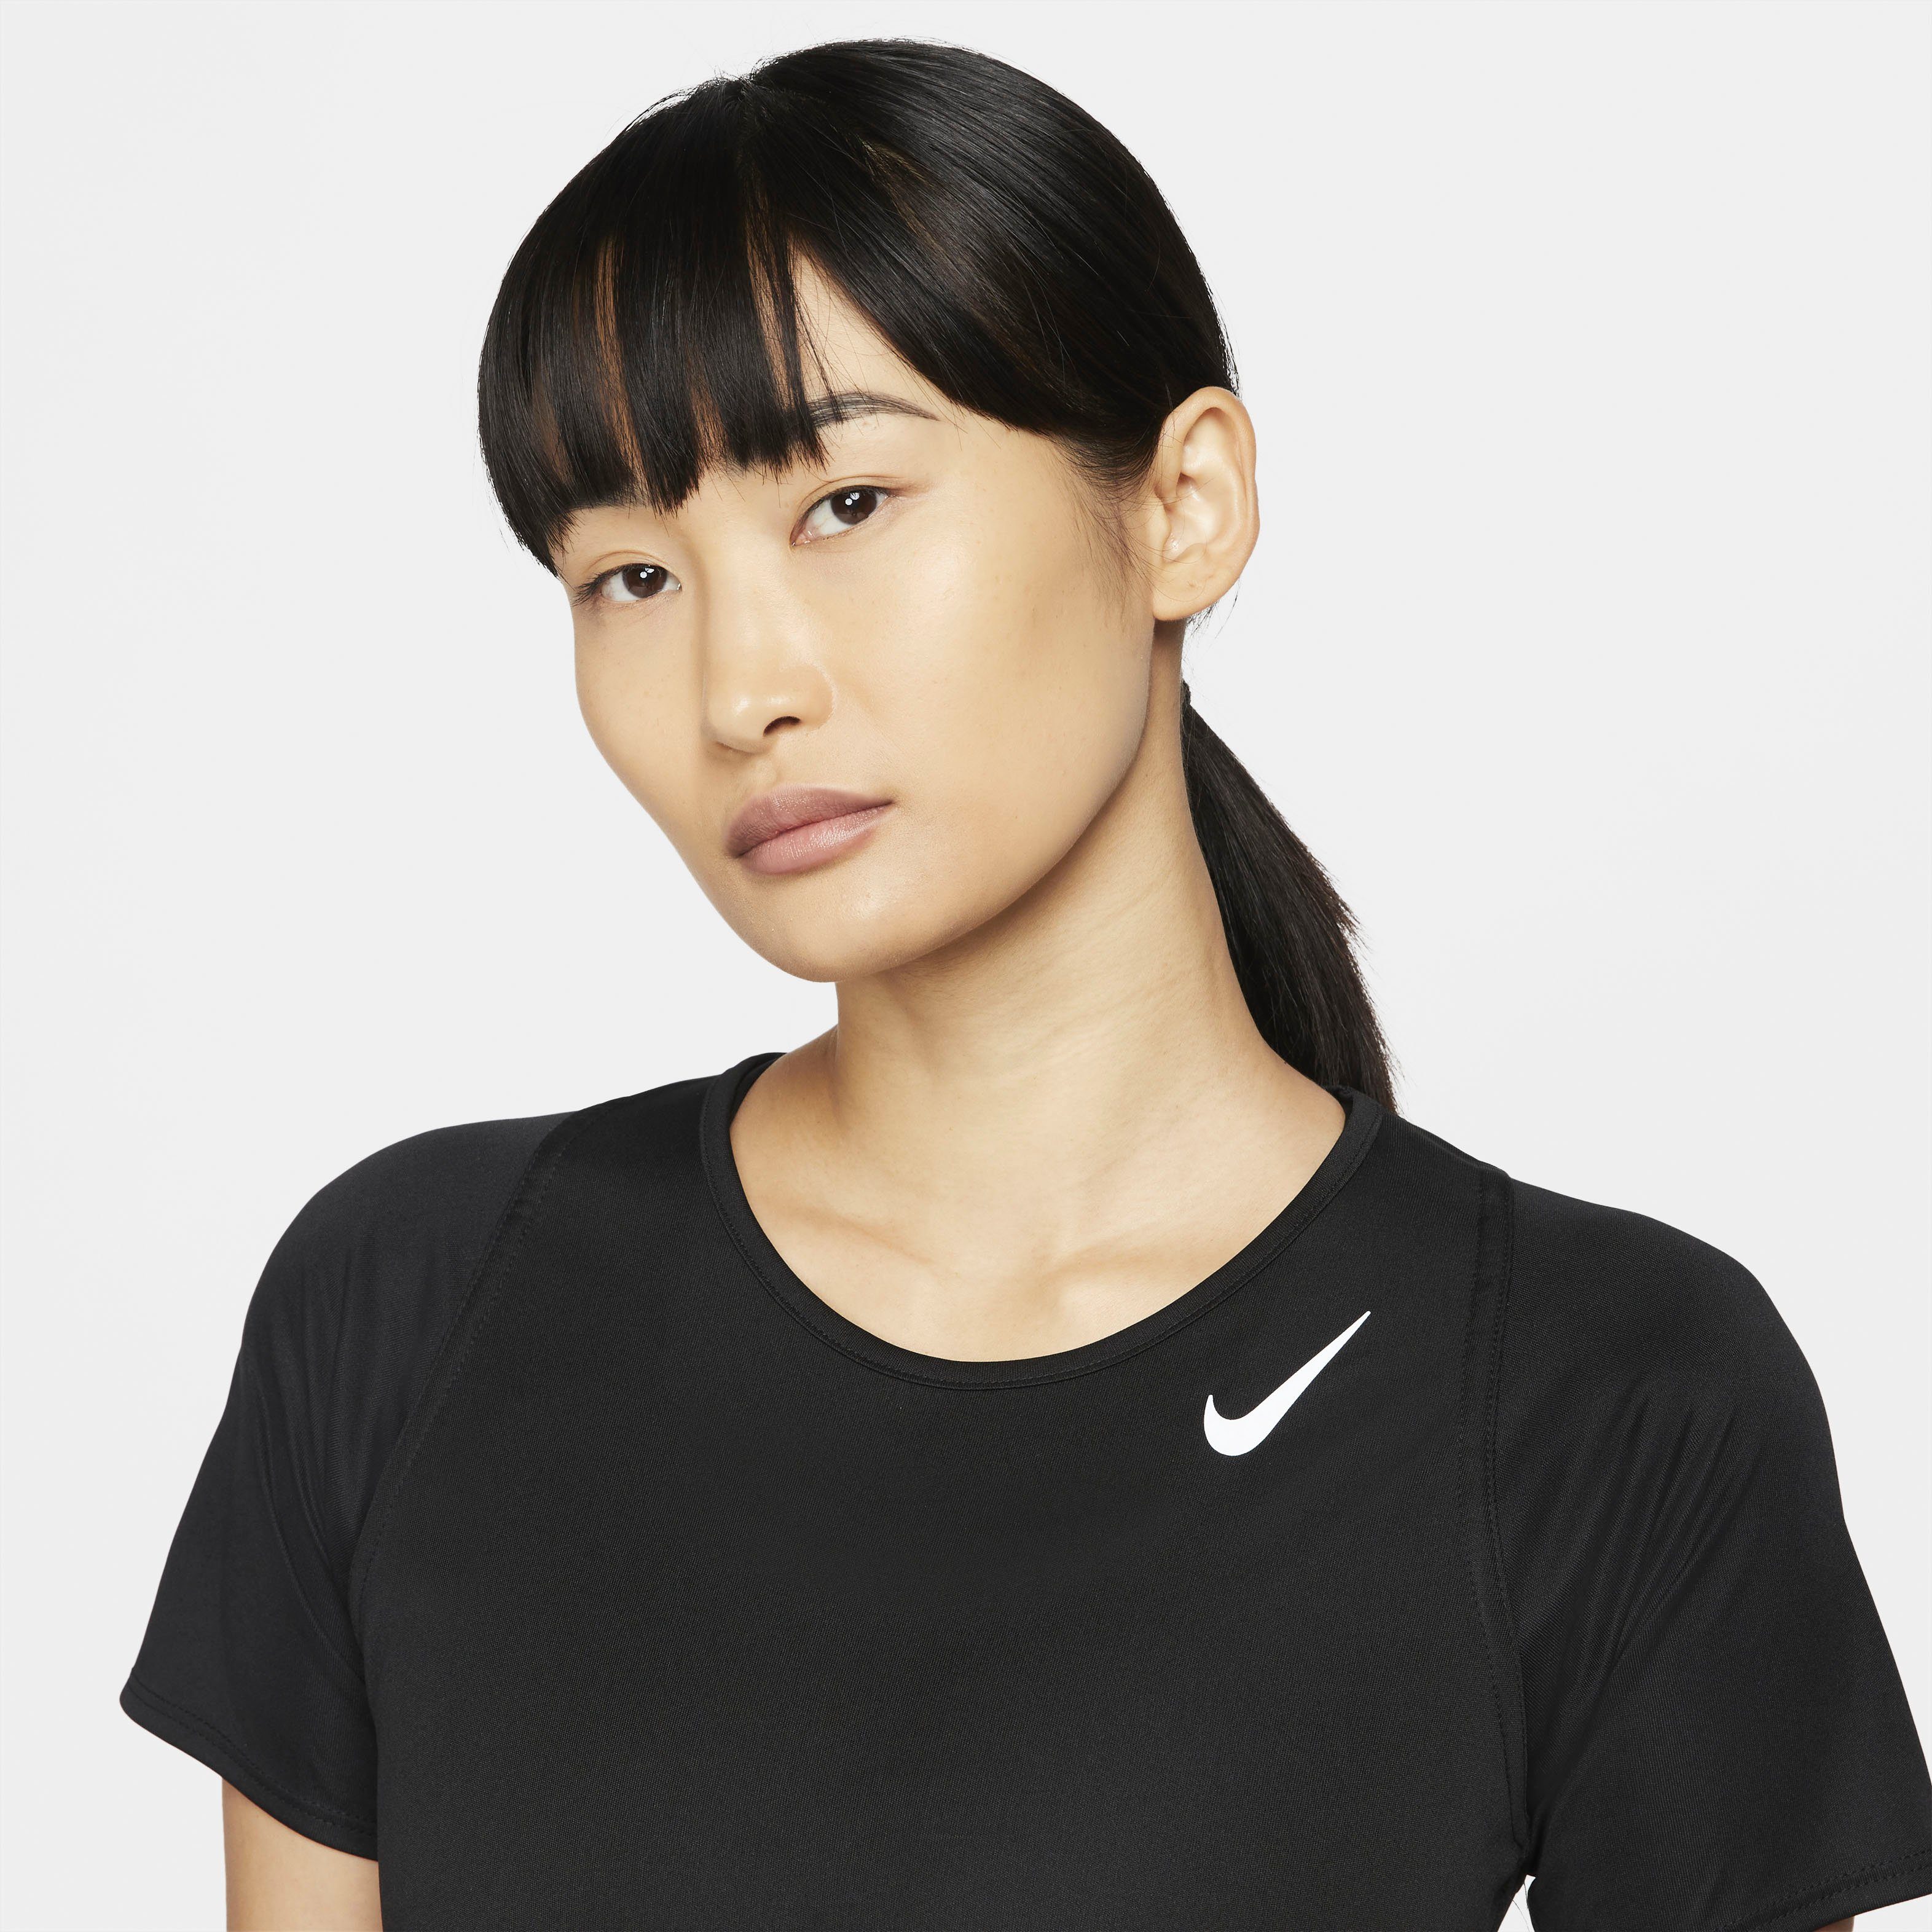 Nike Laufshirt DRI-FIT RACE BLACK/REFLECTIVE SILV SHORT-SLEEVE WOMEN'S TOP RUNNING